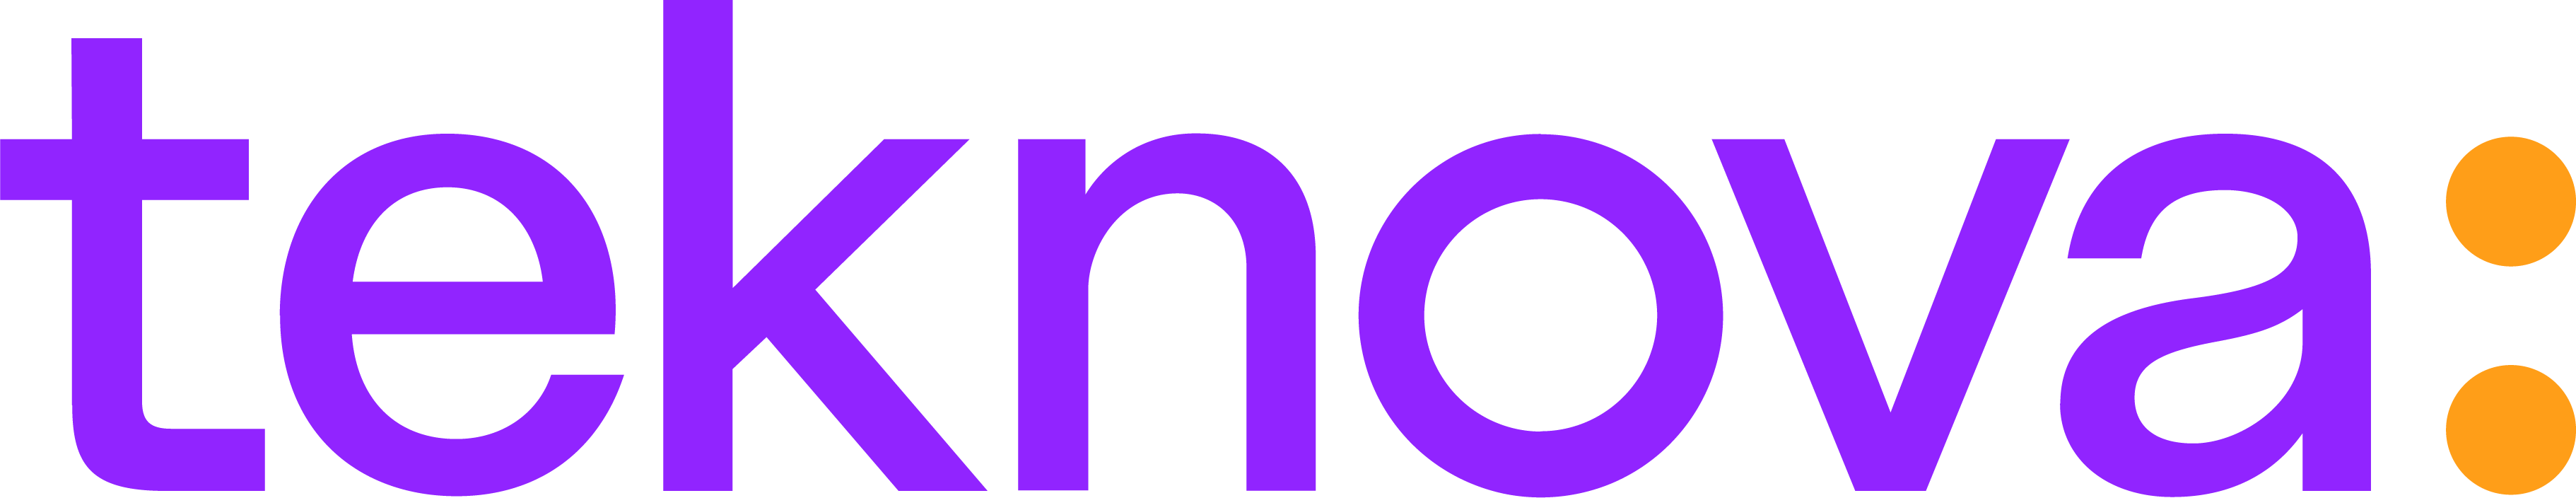 teknova-logo.png